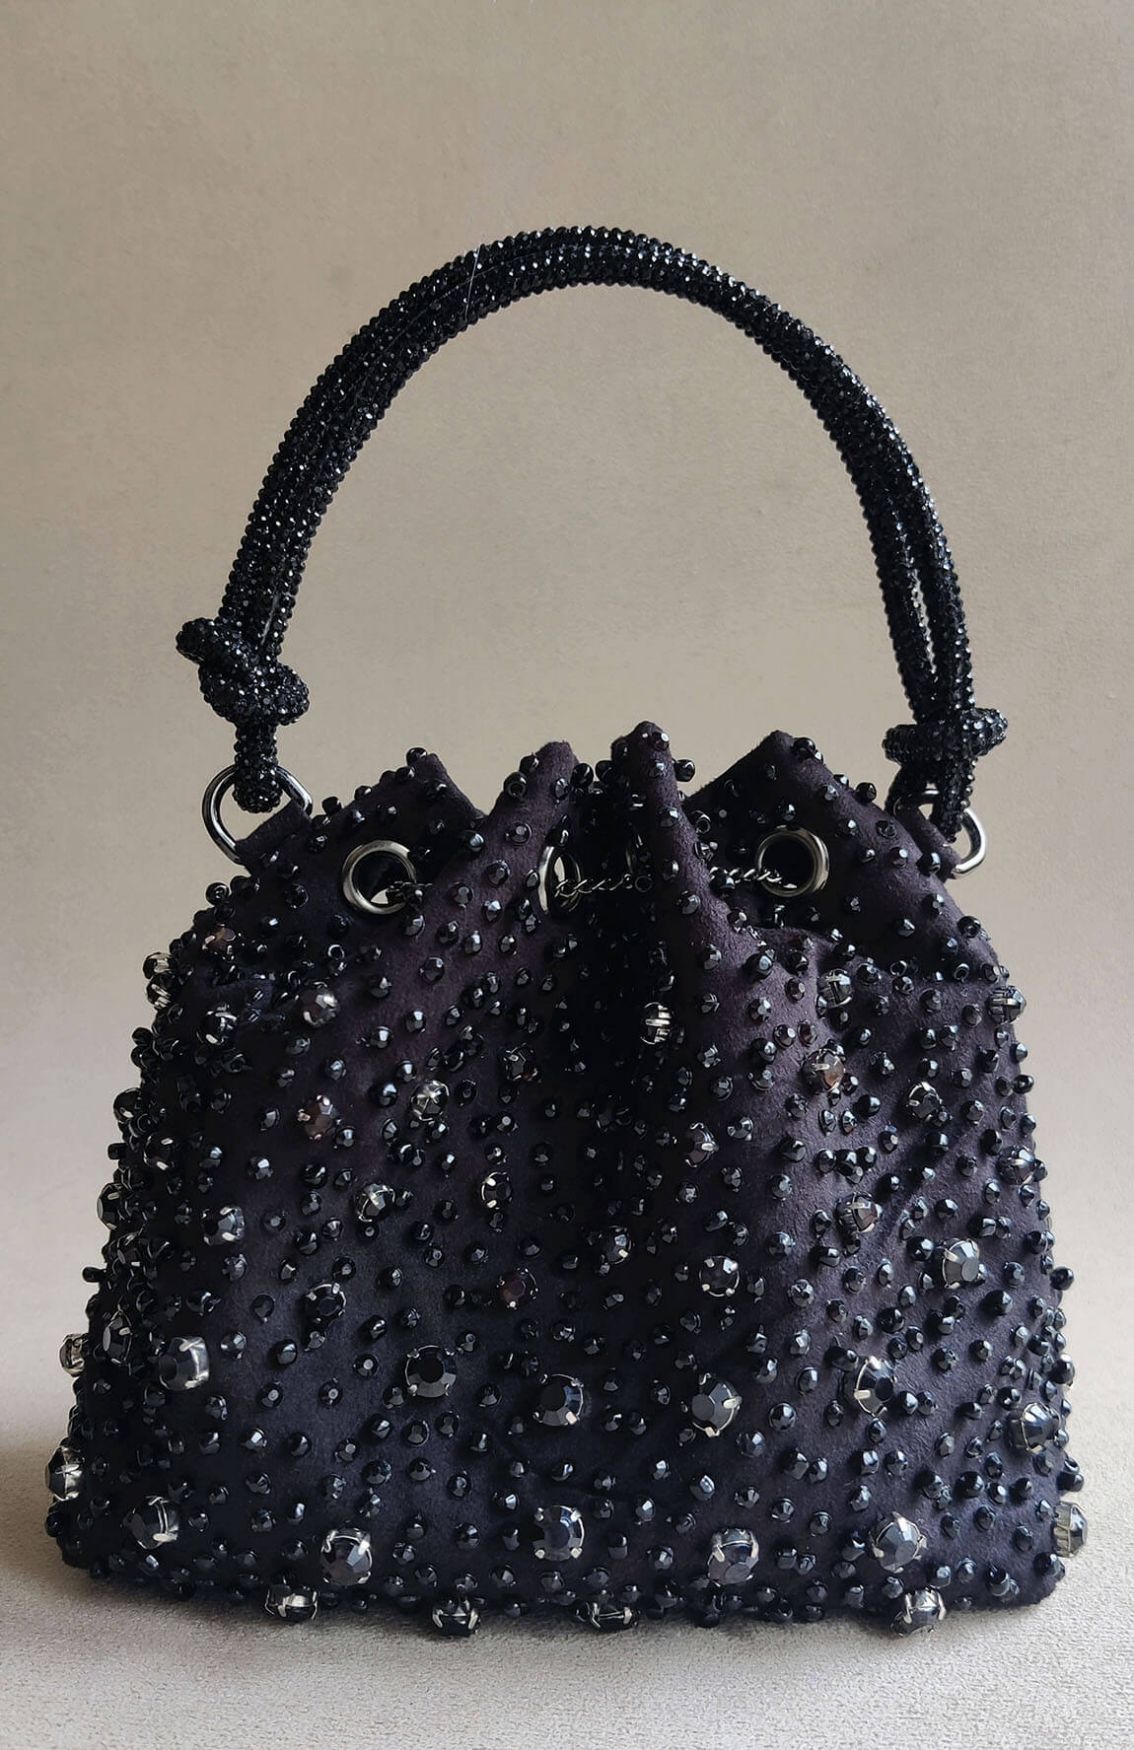 The Starry Bucket Bag In Black